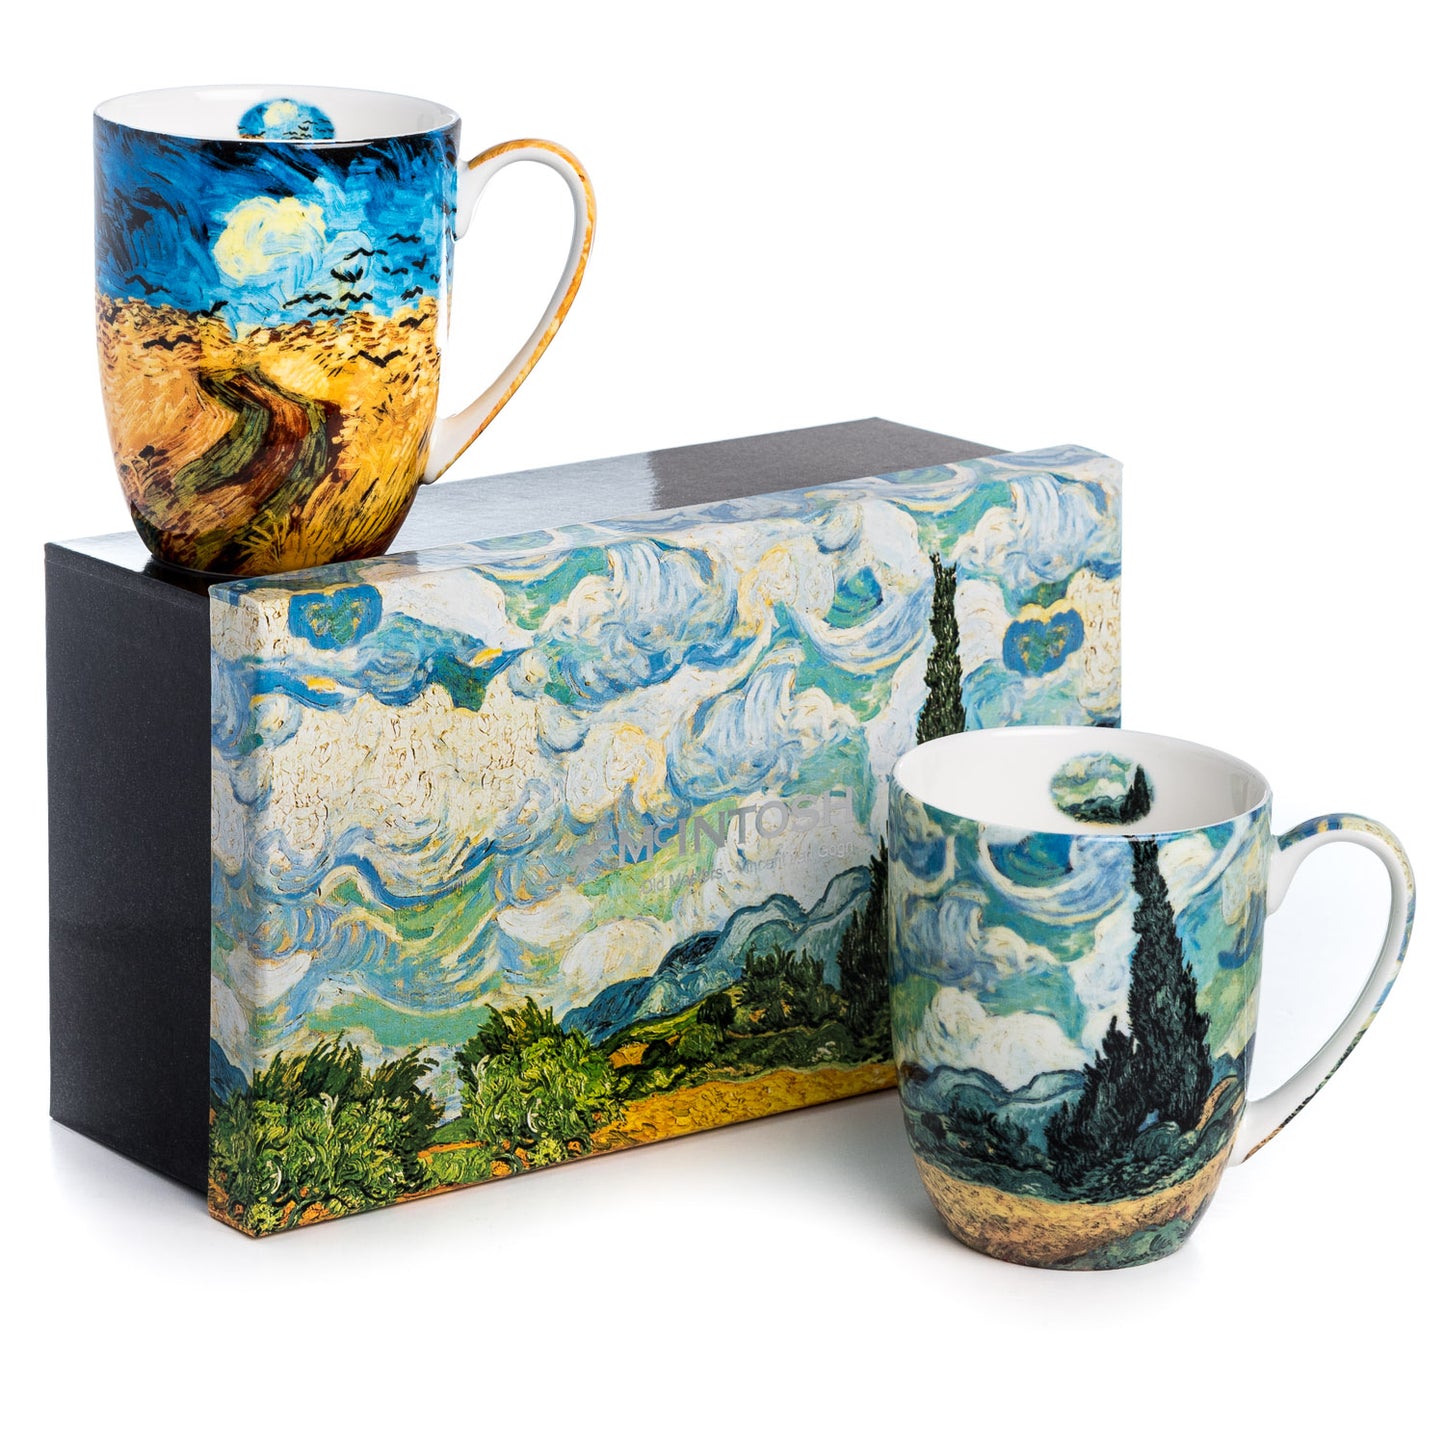 Van Gogh 'Wheatfields' Mug Pair